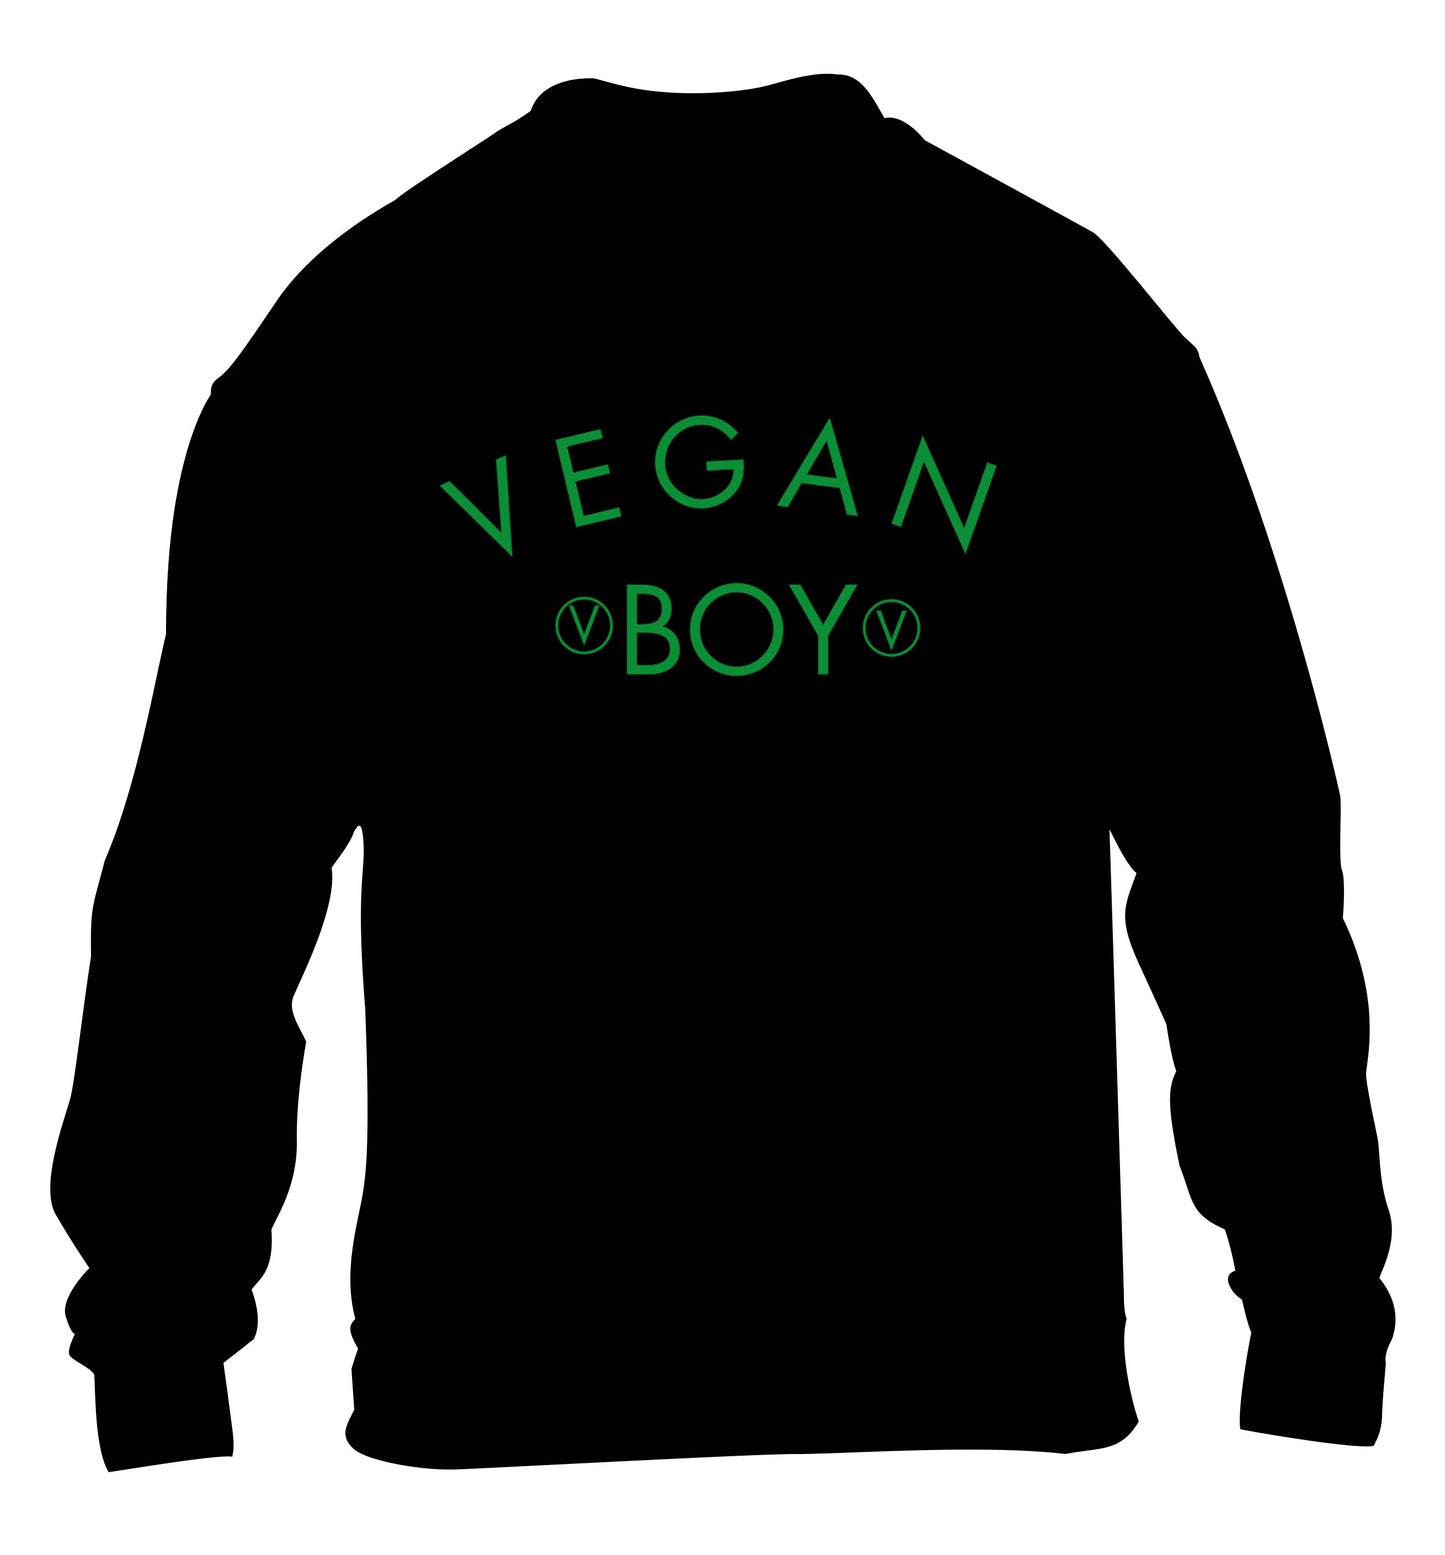 Vegan boy children's black sweater 12-14 Years